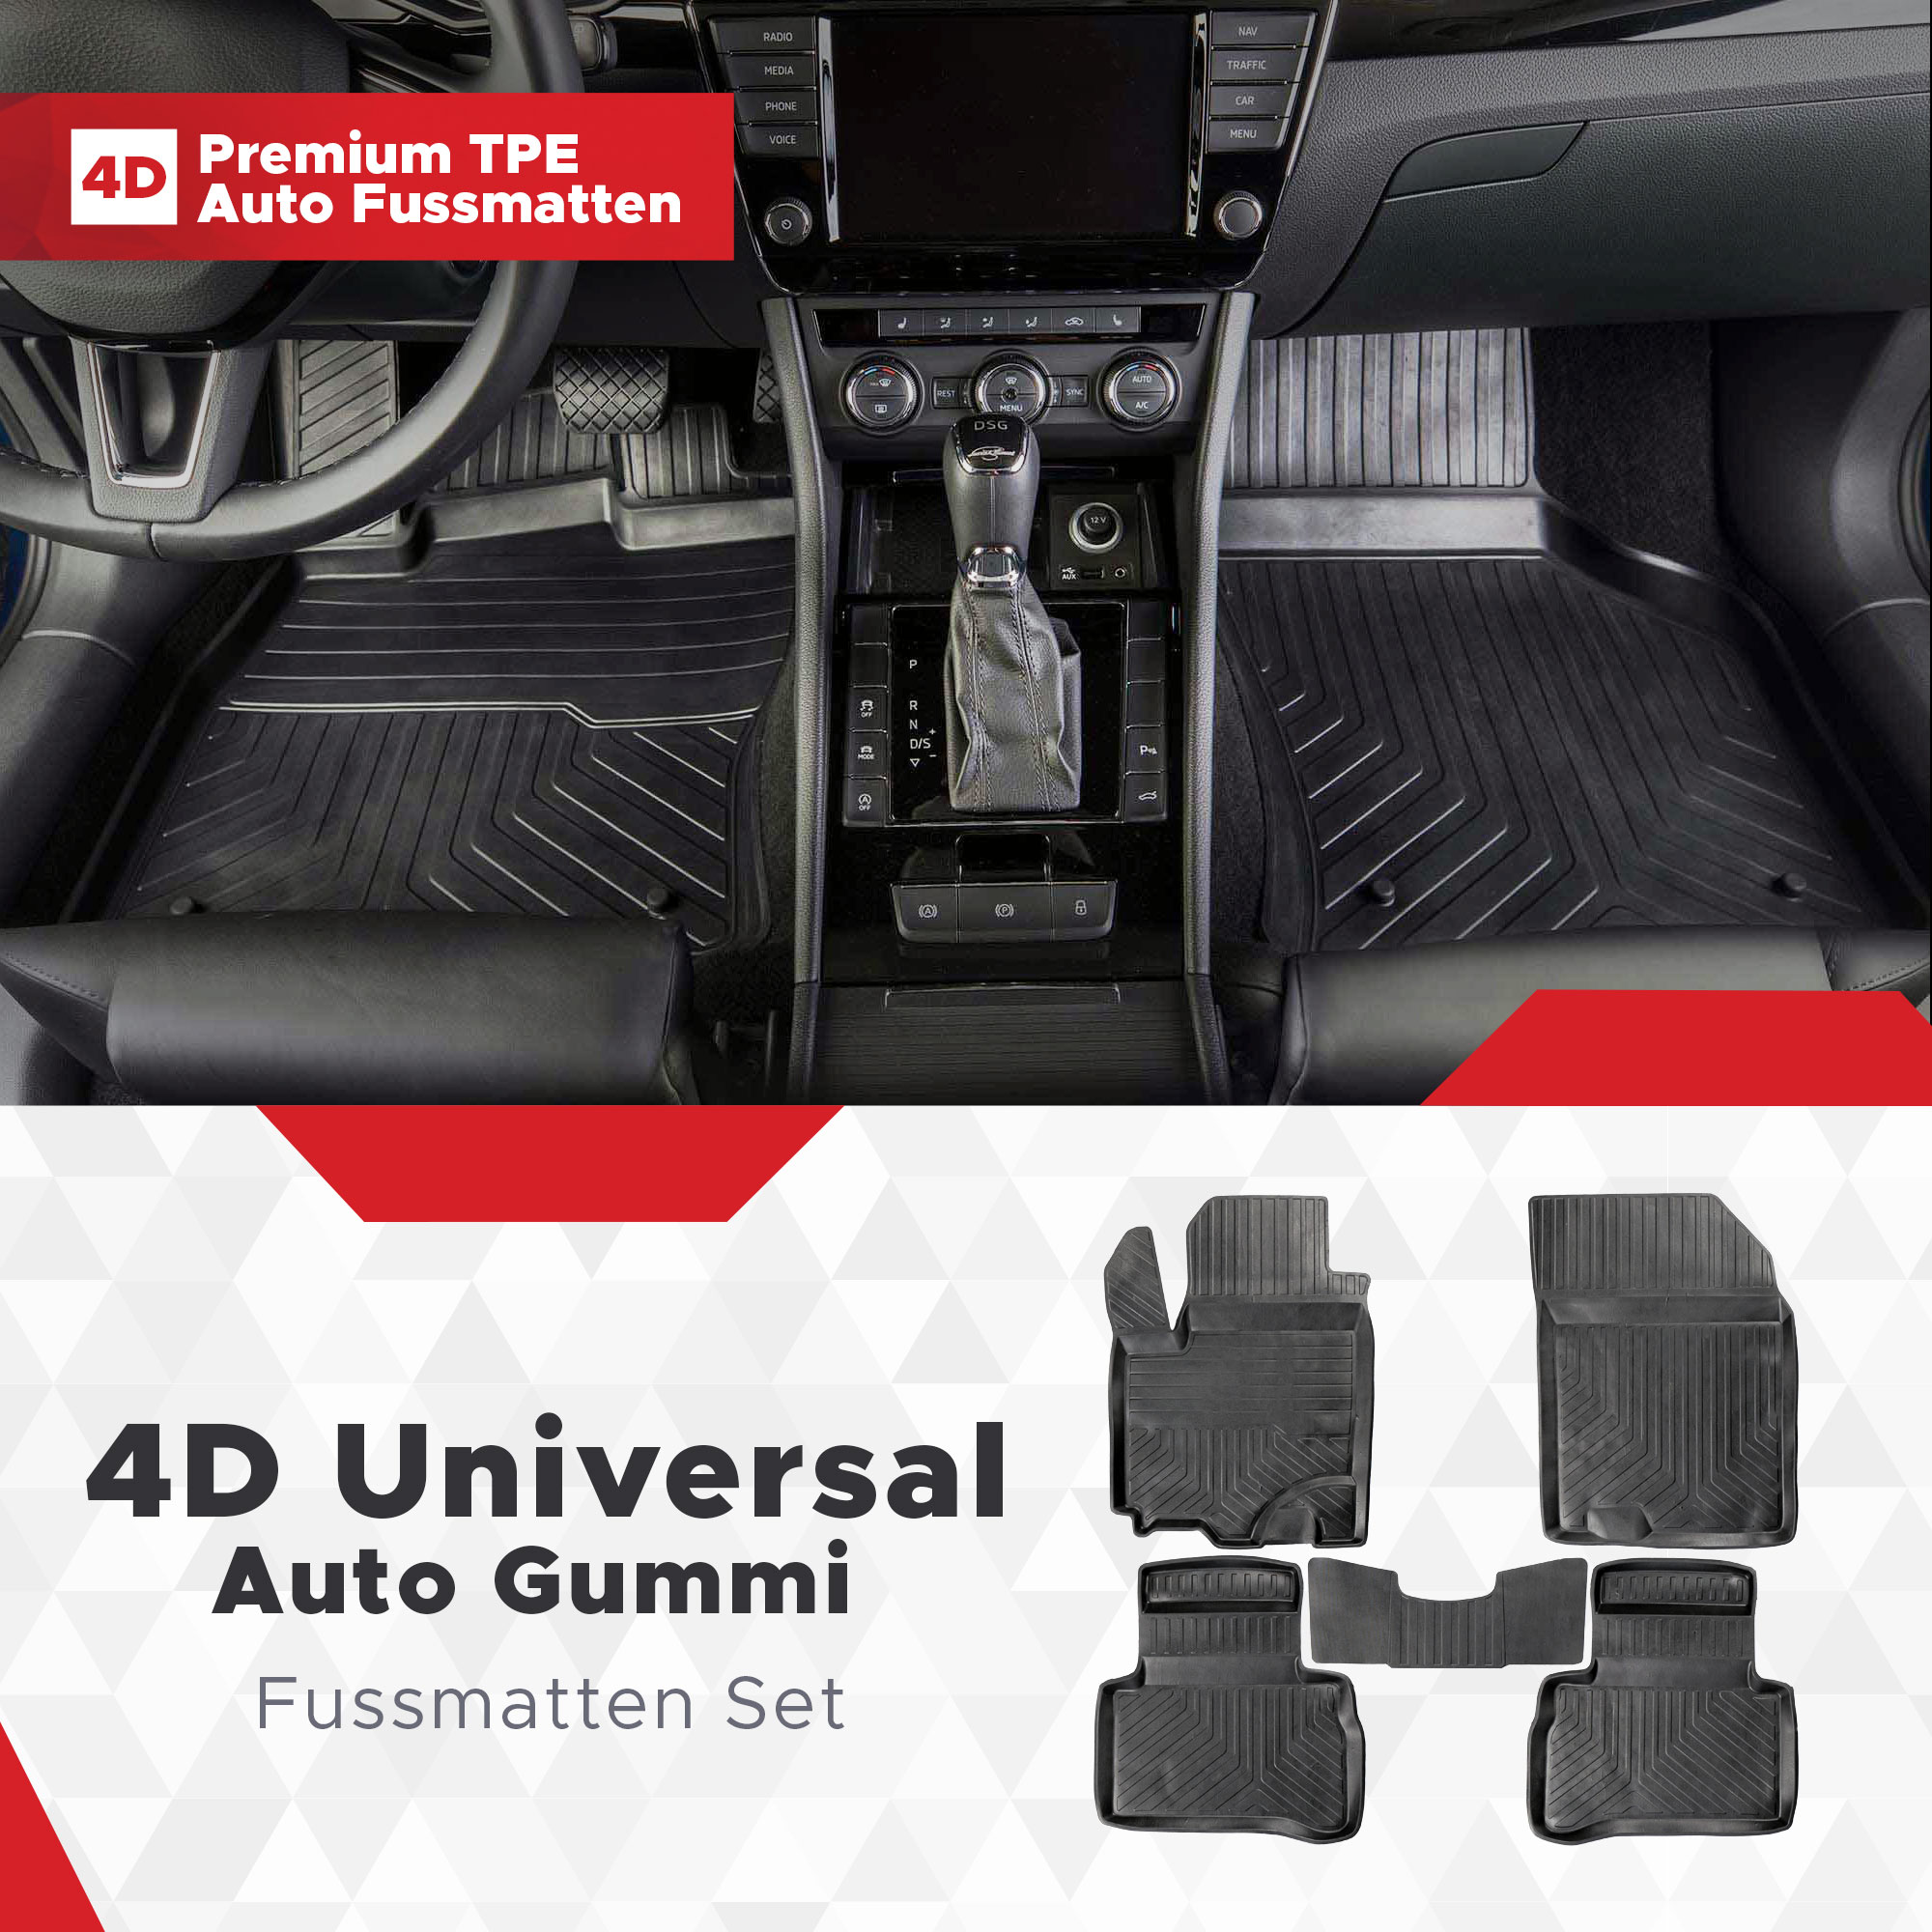 4D Universal Auto Gummi Fußmatten Set - fussmattenprofi